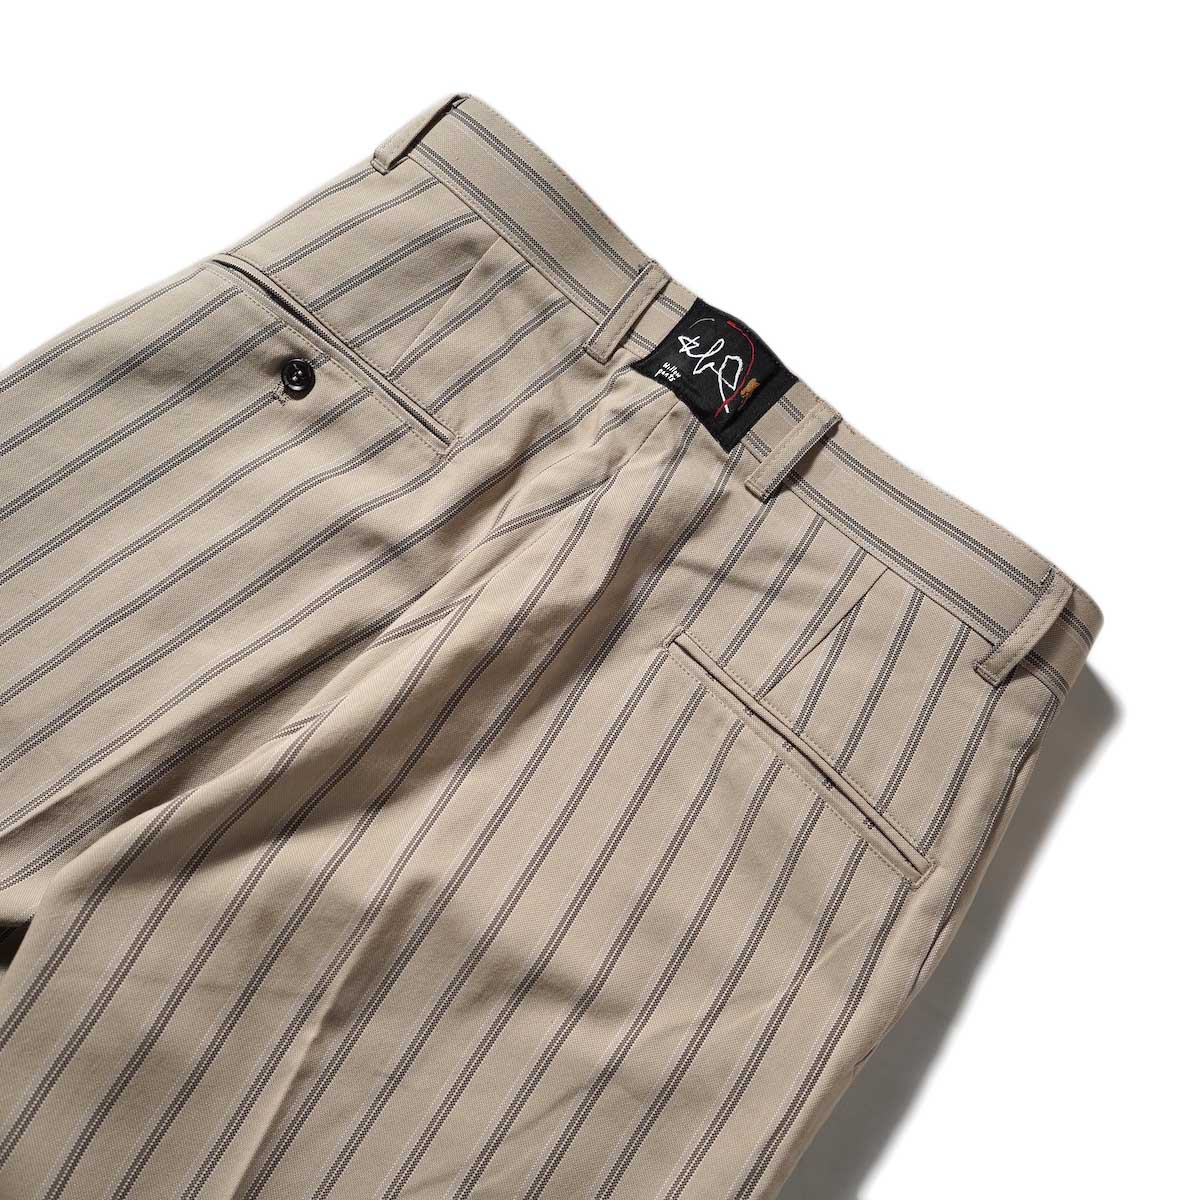 Willow Pants / P-009 - Dead Stock Beige Stripe Pants ヒップポケット